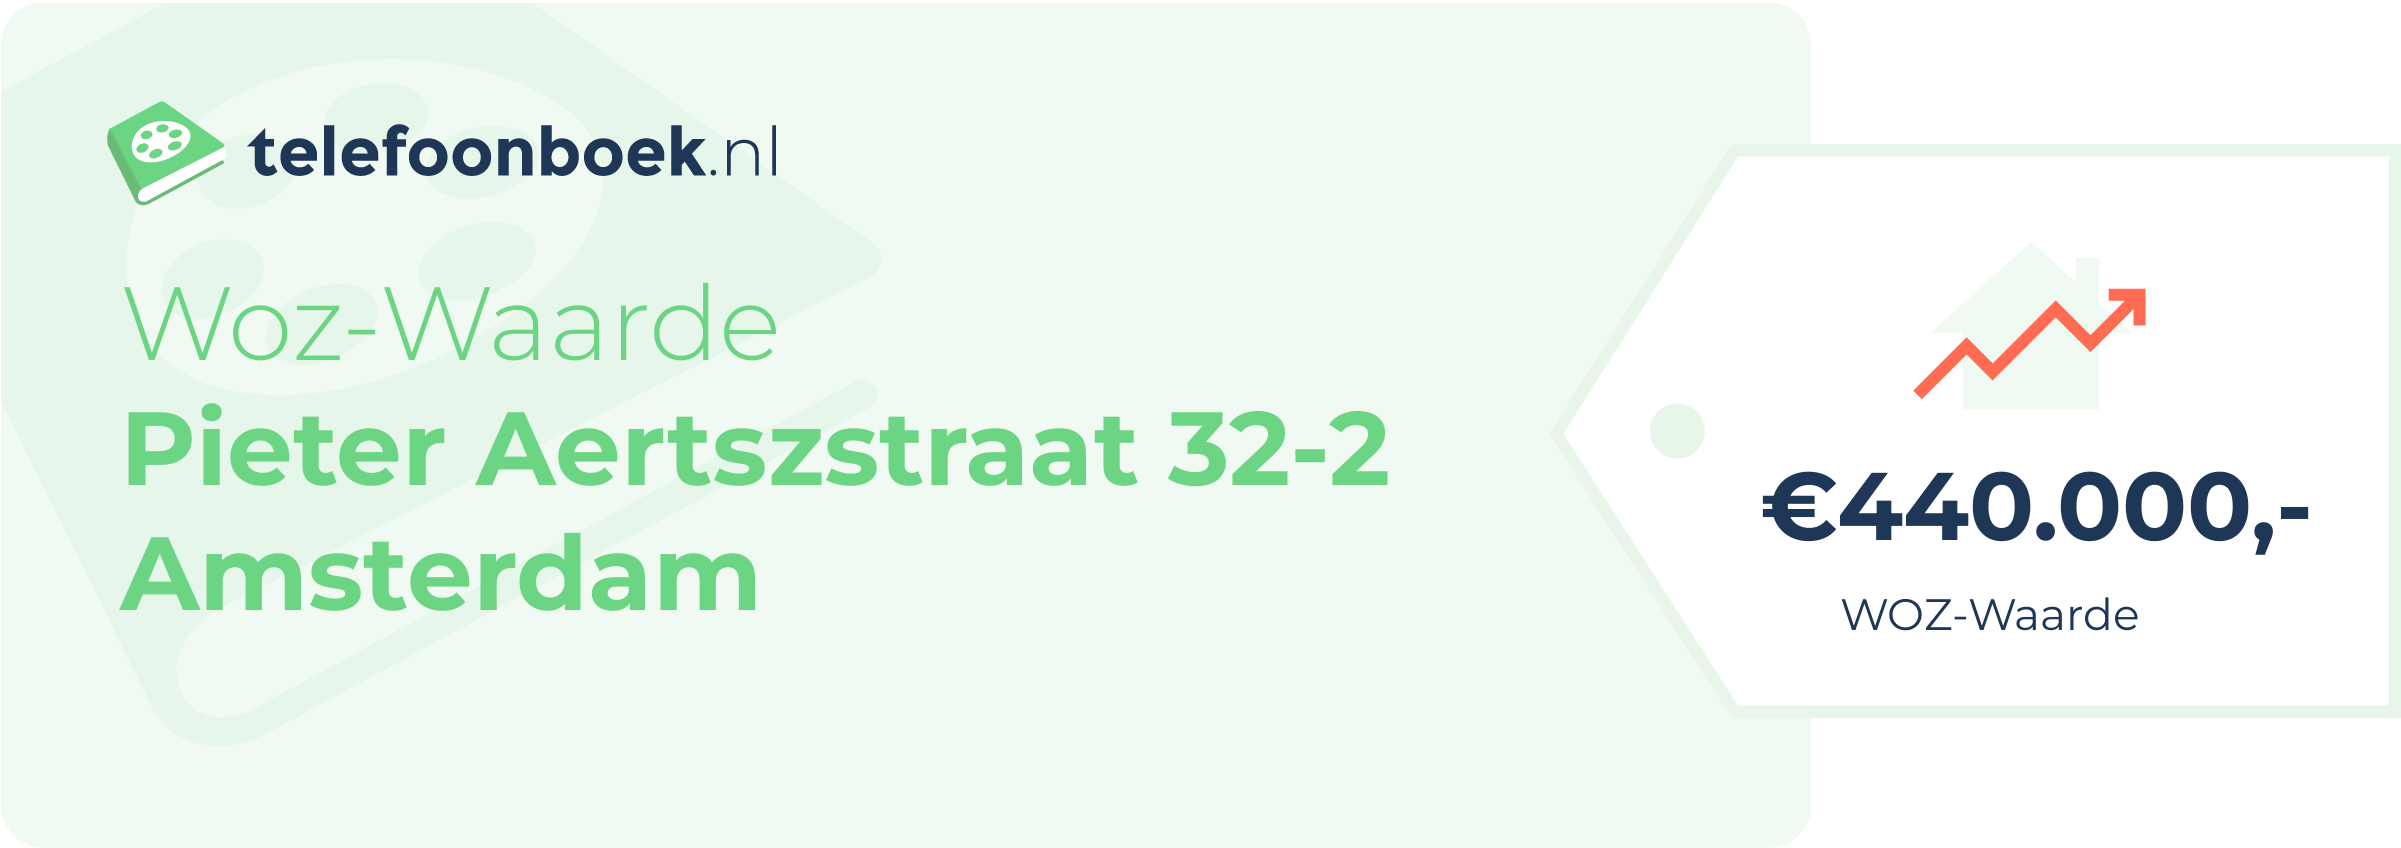 WOZ-waarde Pieter Aertszstraat 32-2 Amsterdam